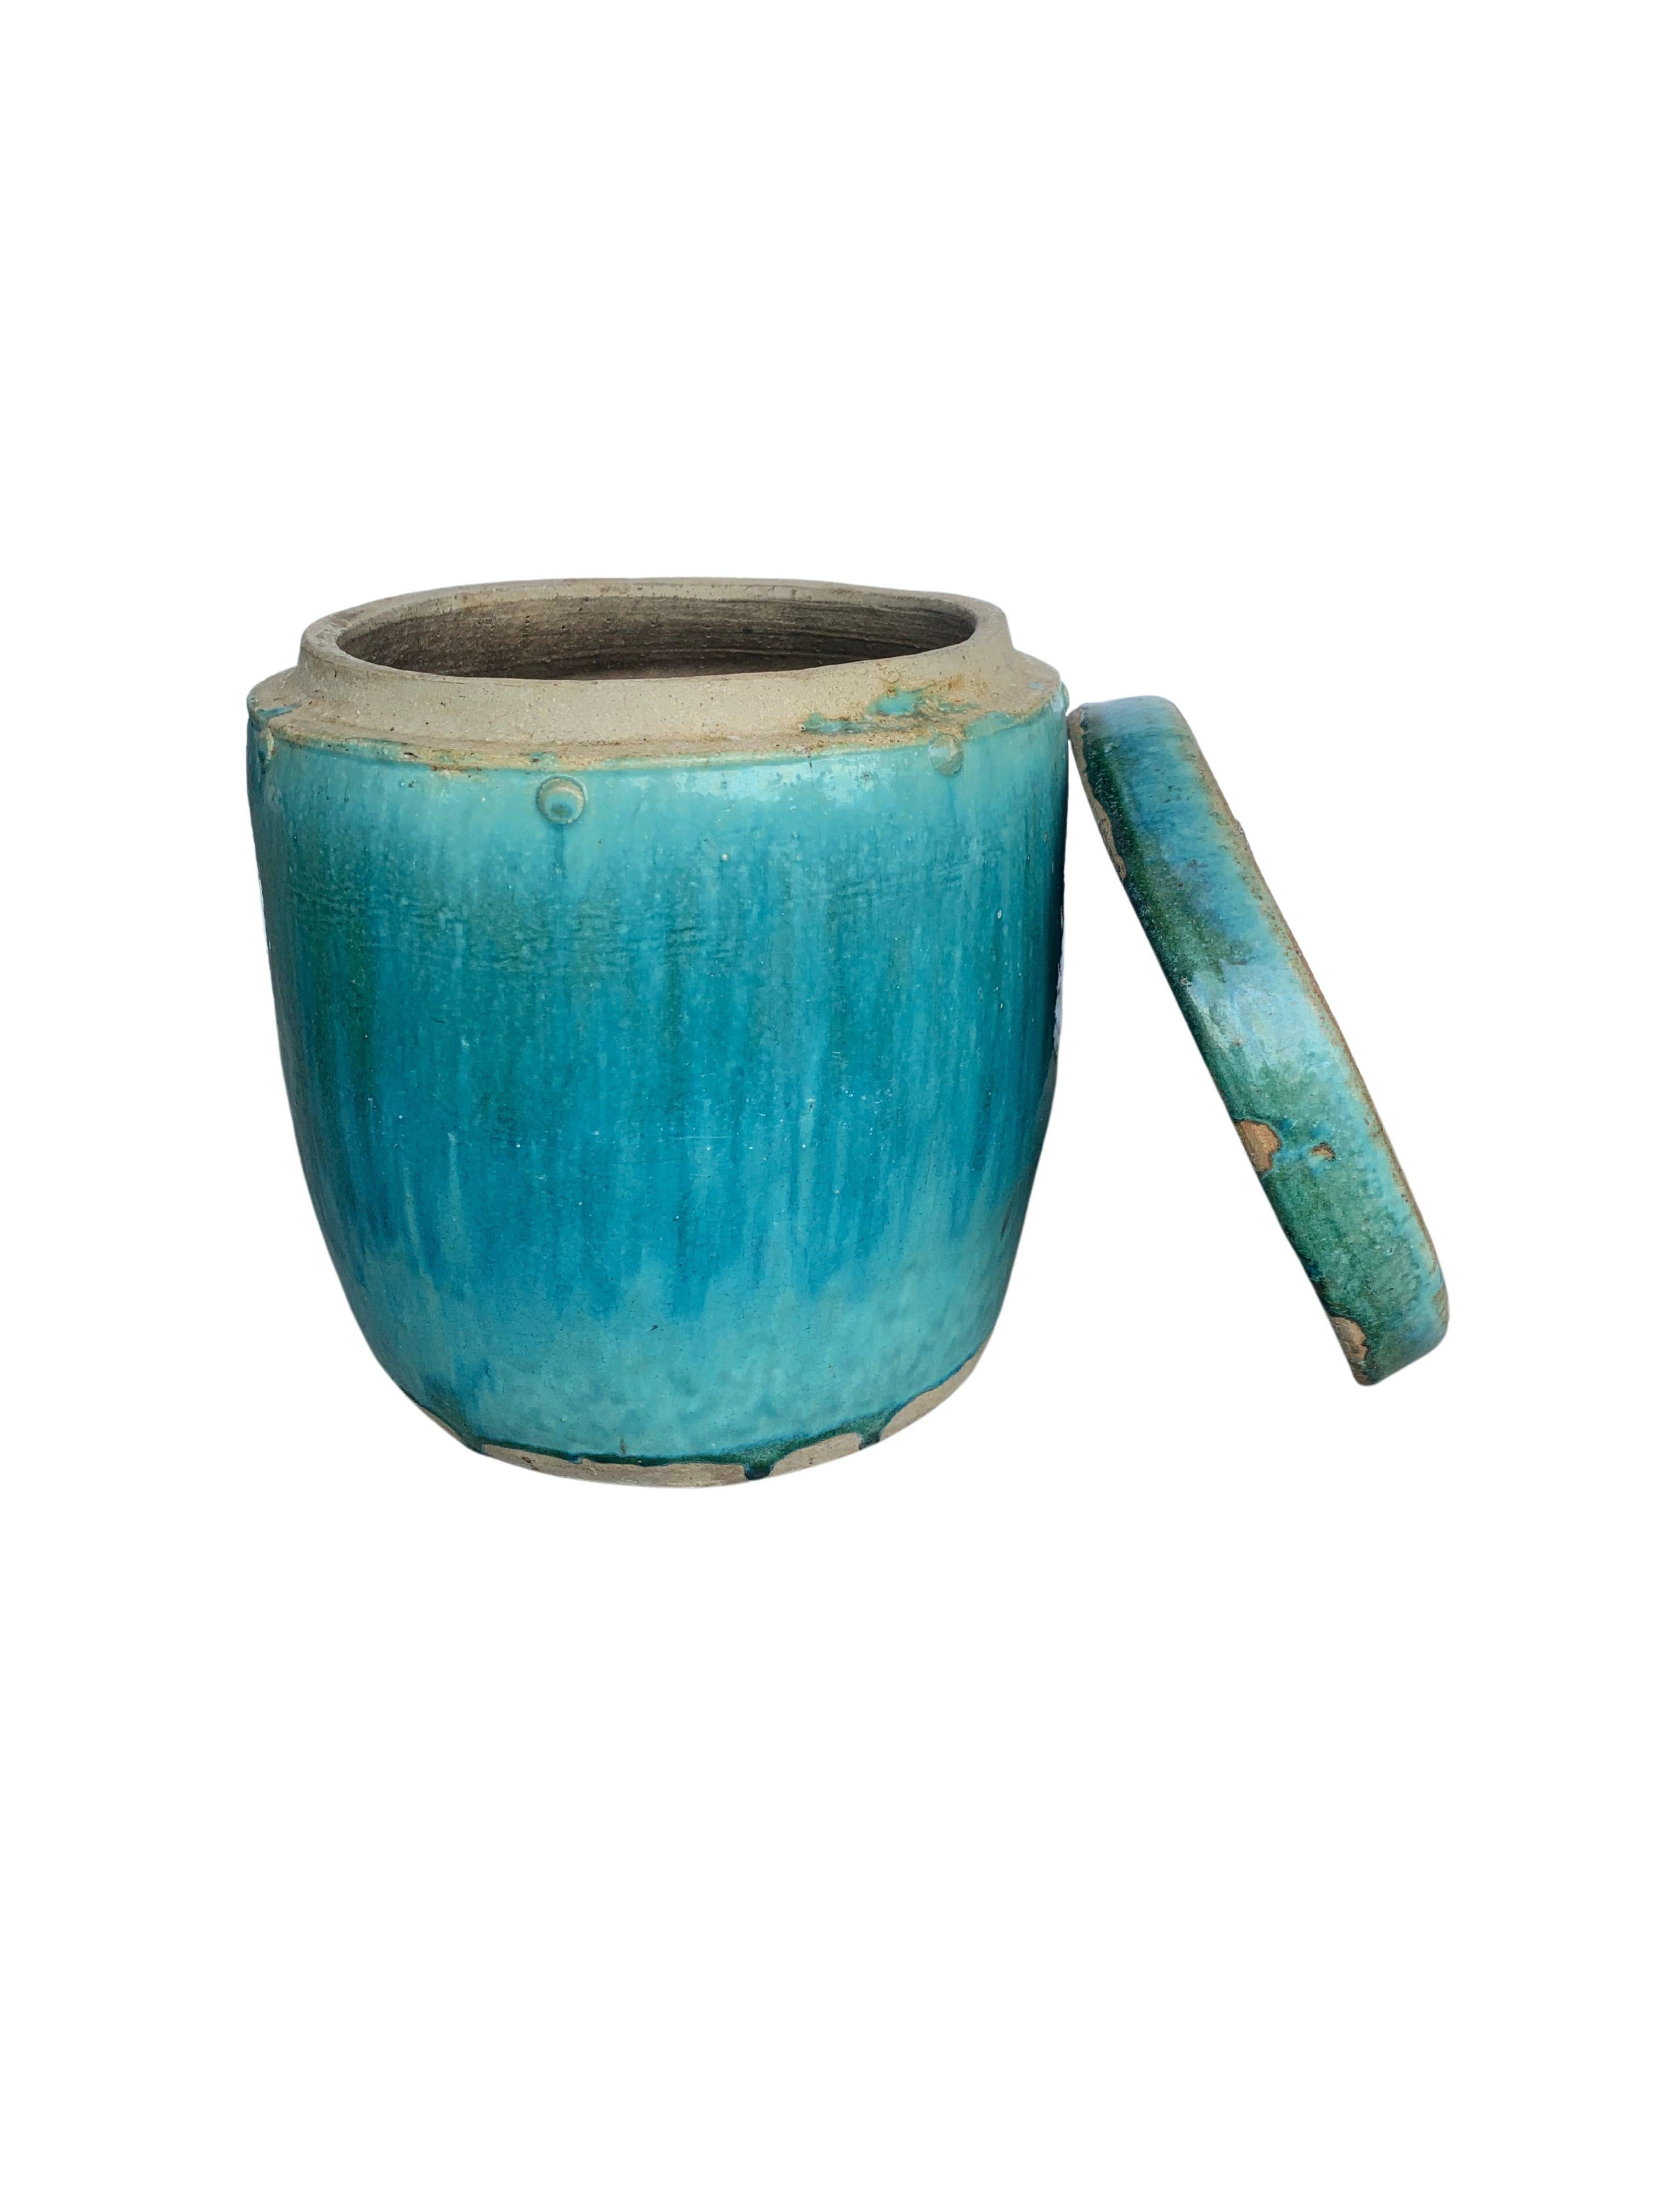 Qing Chinese Shiwan Glazed Ceramic Jar / Planter, c. 1900 For Sale